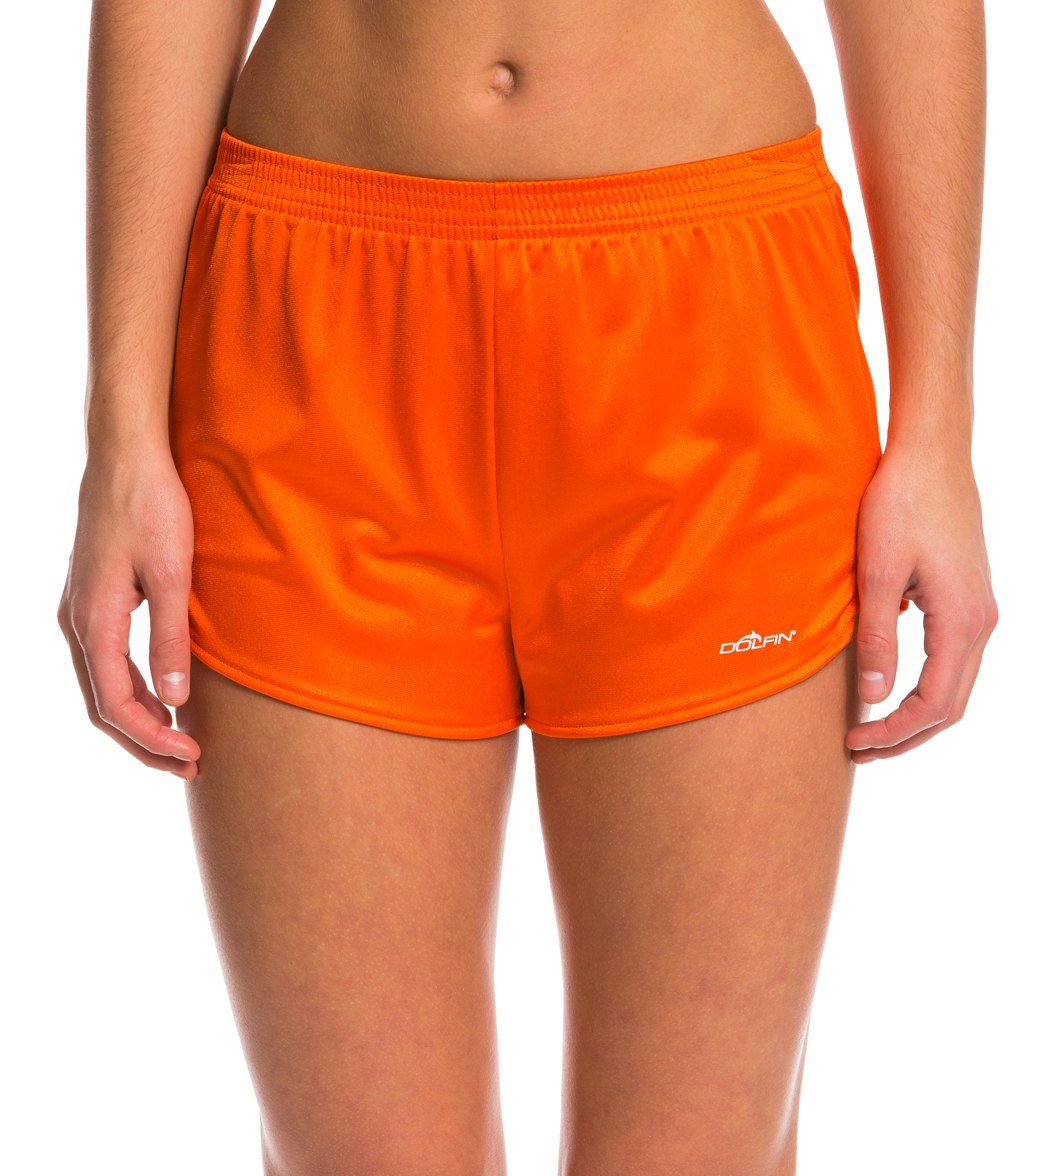 Dolfin Original Tricot Short - Orange Xl Size Xl Nylon - Swimoutlet.com